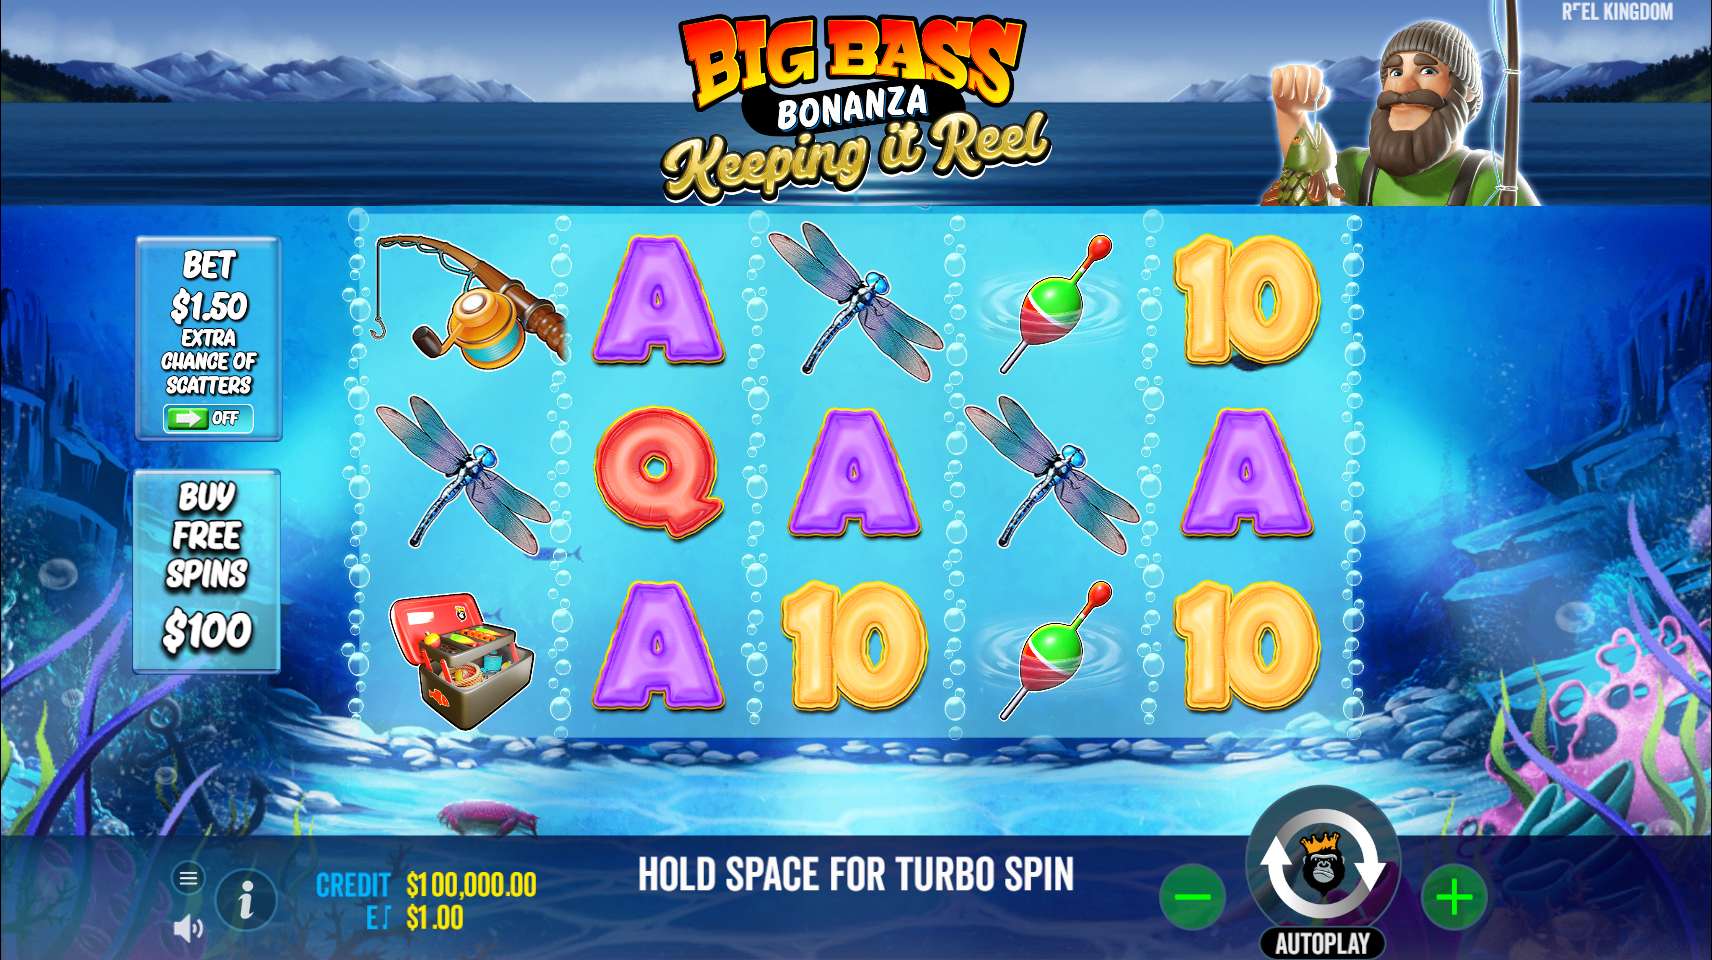 Big Bass Bonanza Keeping it Reel pragmatic play slot online